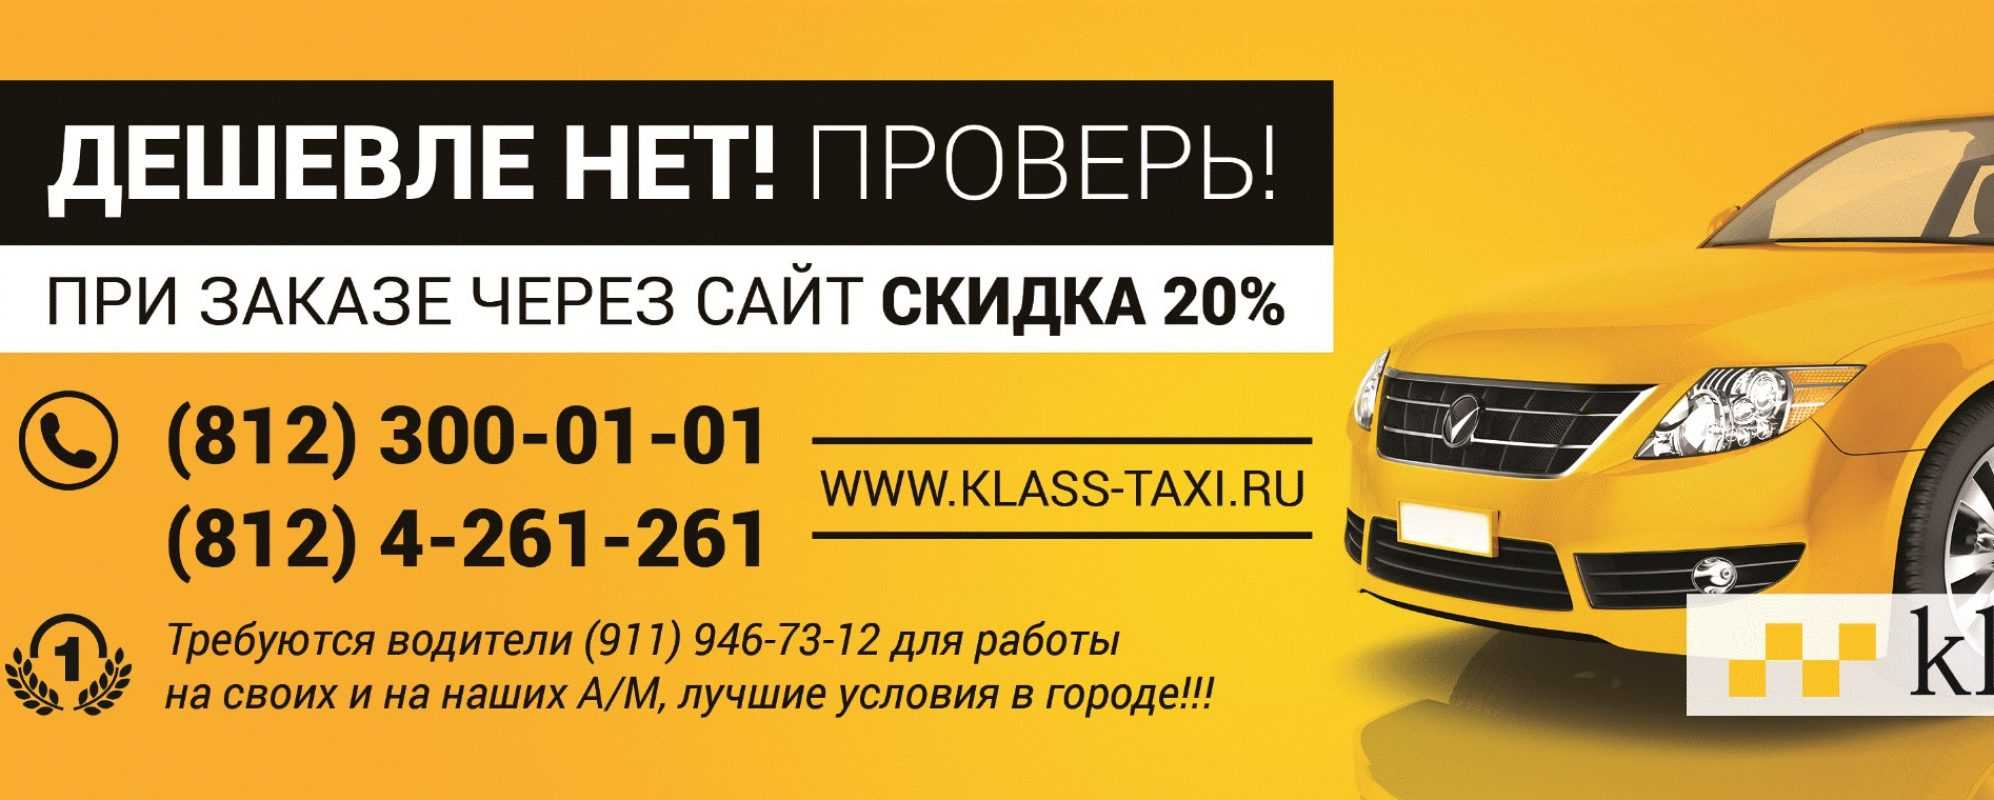 Такси город екатеринбург телефон. Самое дешёвое такси. Вызов такси. Самое дешевое такси в Москве. Самое дешевое такси номер.